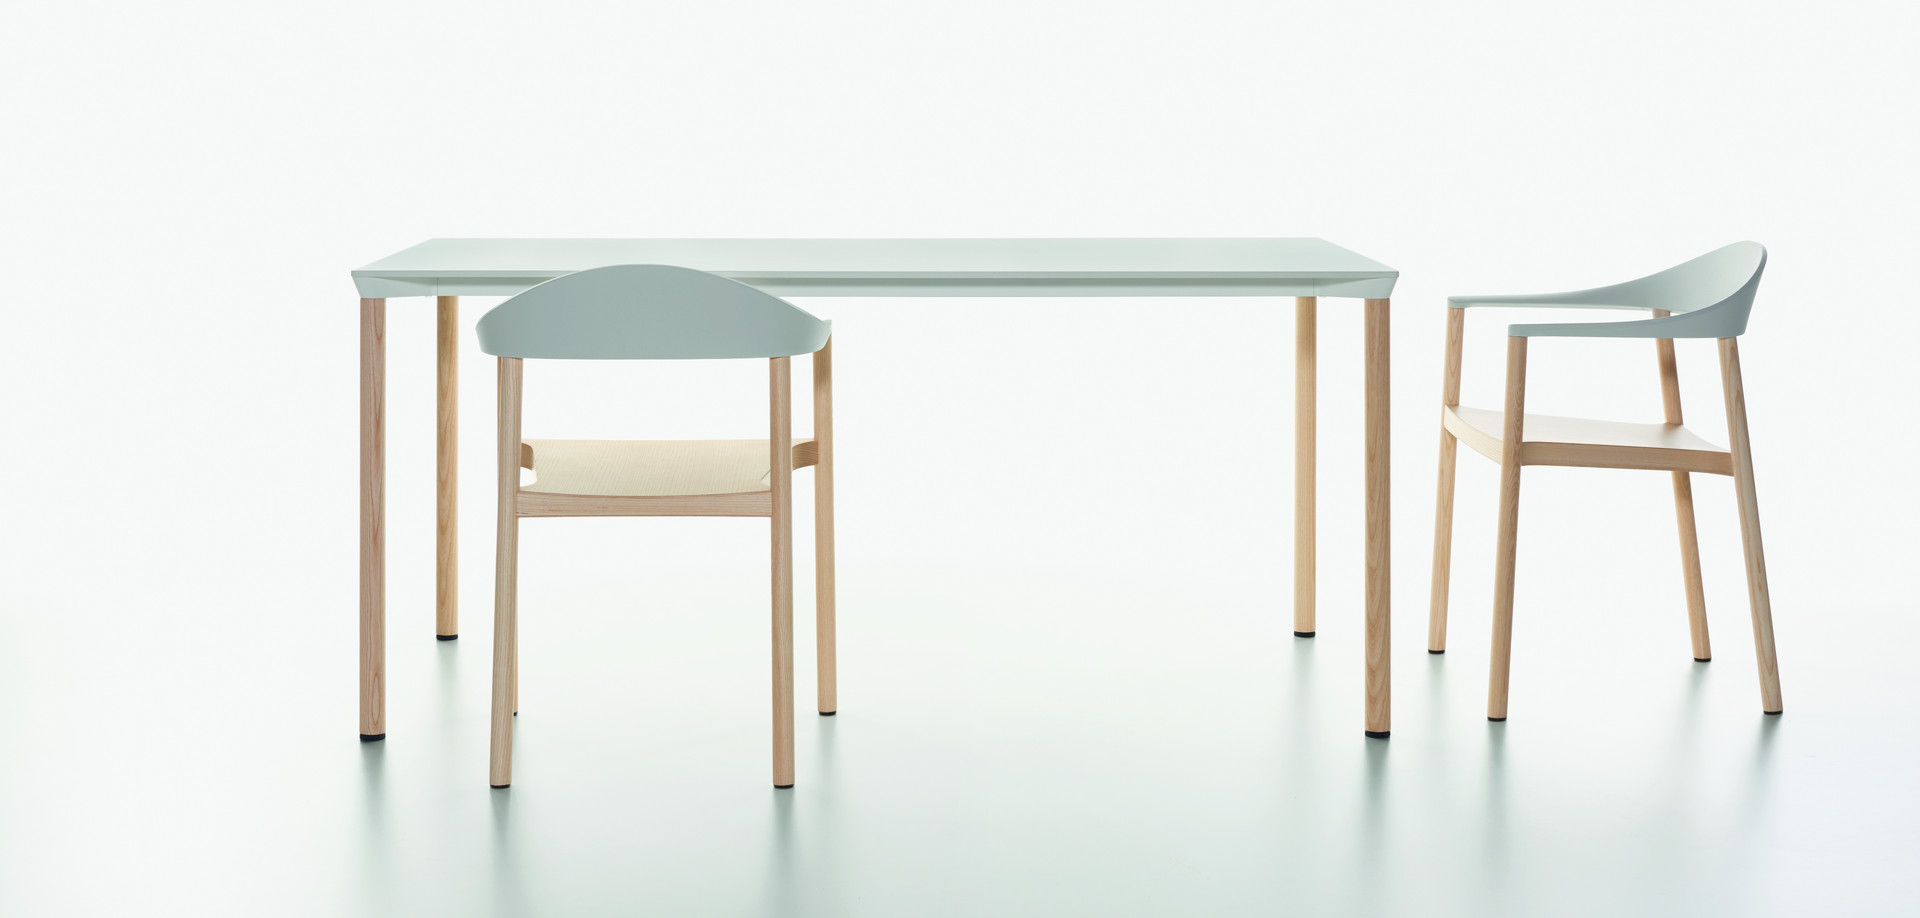 Plank - MONZA table rectangular, white HPL table top, natural ash legs - MONZA armchair